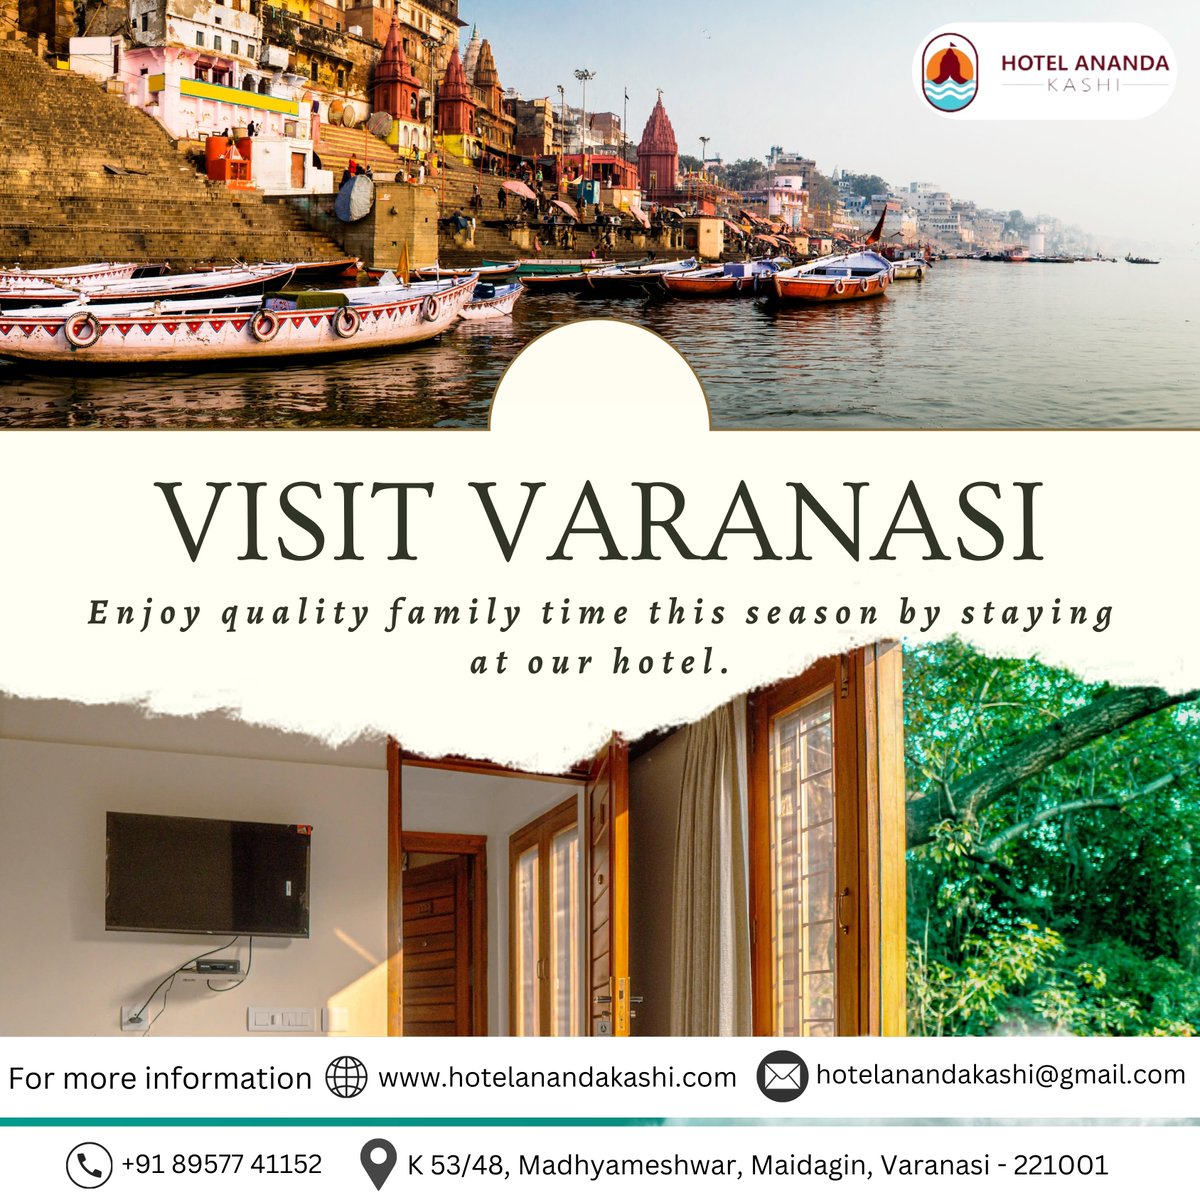 Escape to serenity in Varanasi! 🌿✨ Create unforgettable family memories at Hotel Ananda Kashi. 💖
.
#hotelanandakashi #hotel #facilities #hotels #room #stay #hotelroom #hotelmanagement #hospitality #vacation #staycation #restaurant #exclusive #luxury #varanasi #explorepage